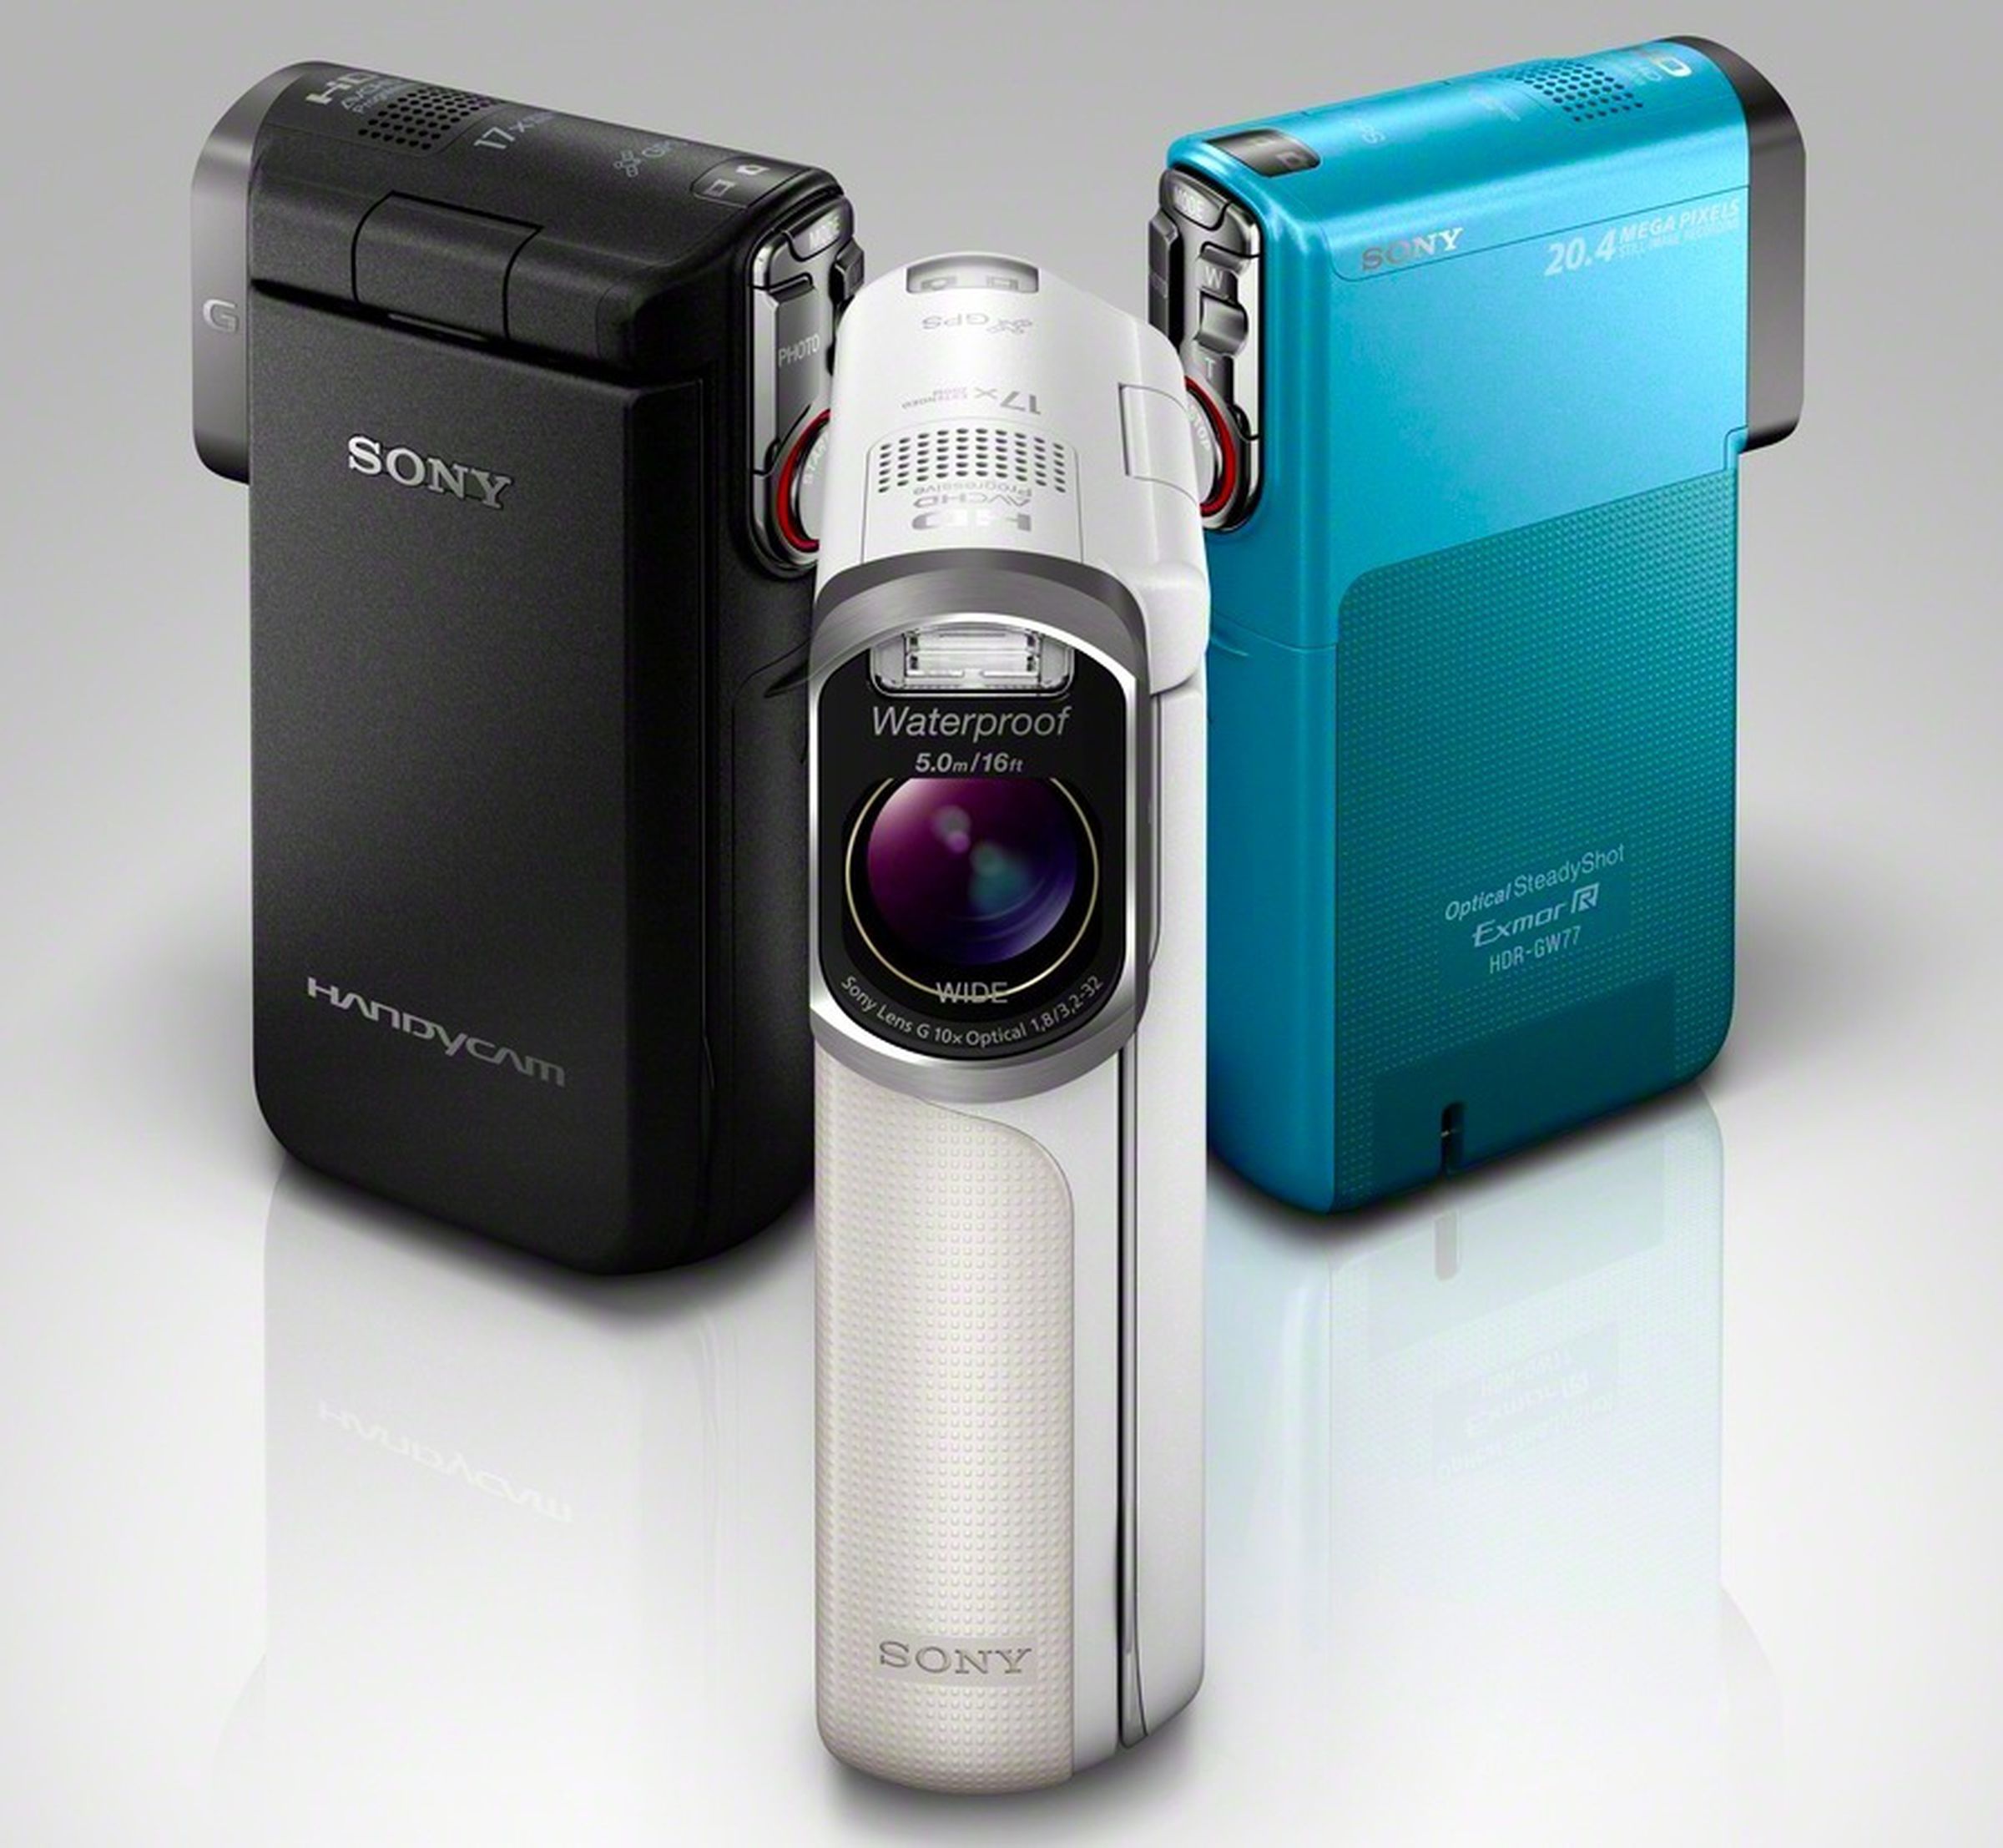 Sony HandyCam HDR-GW77V press photos